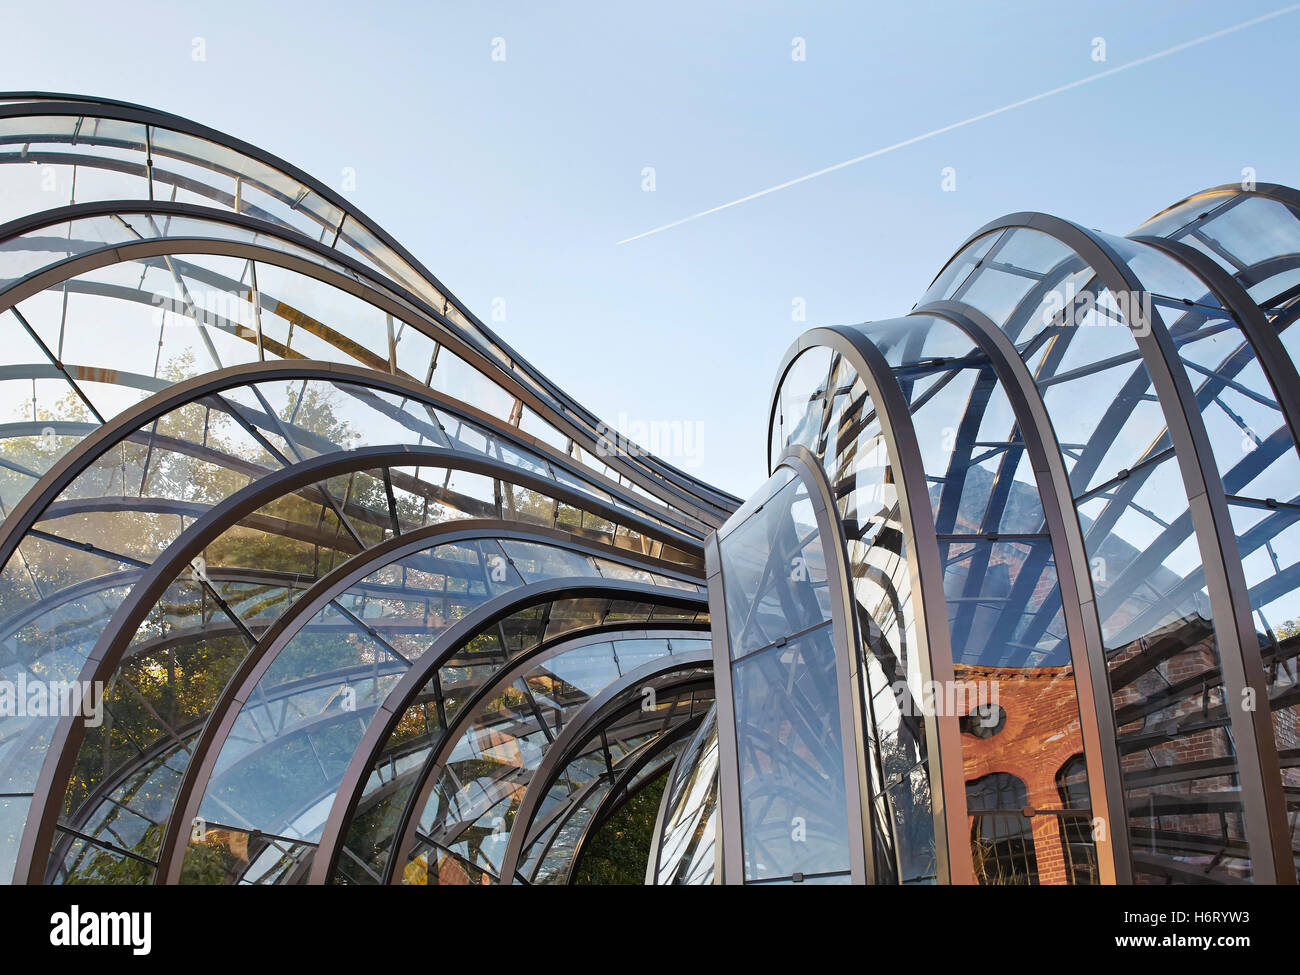 Detail of curved greenhouse frame. Bombay Sapphire Distillery, Laverstoke, United Kingdom. Architect: Heatherwick, 2014. Stock Photo